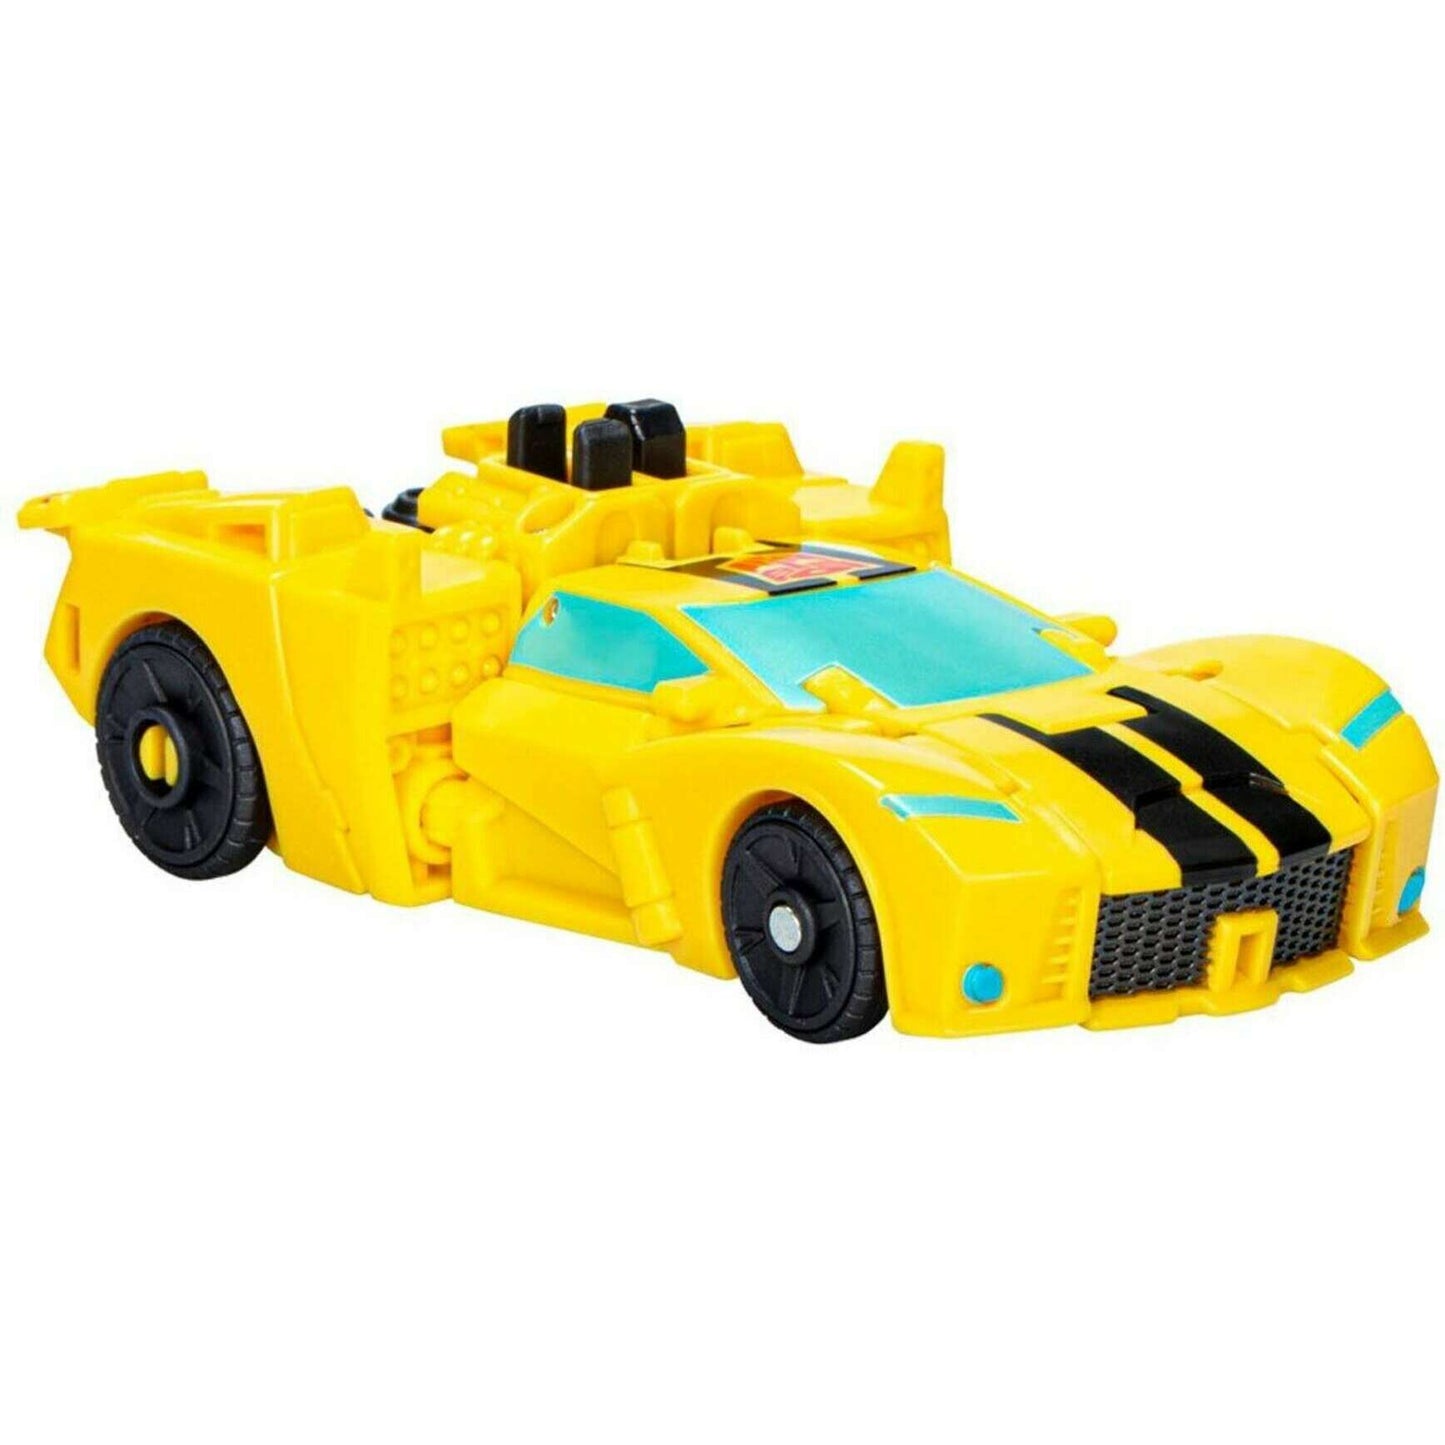 Toys N Tuck:Transformers EarthSpark Warrior Class Bumblebee,Transformers